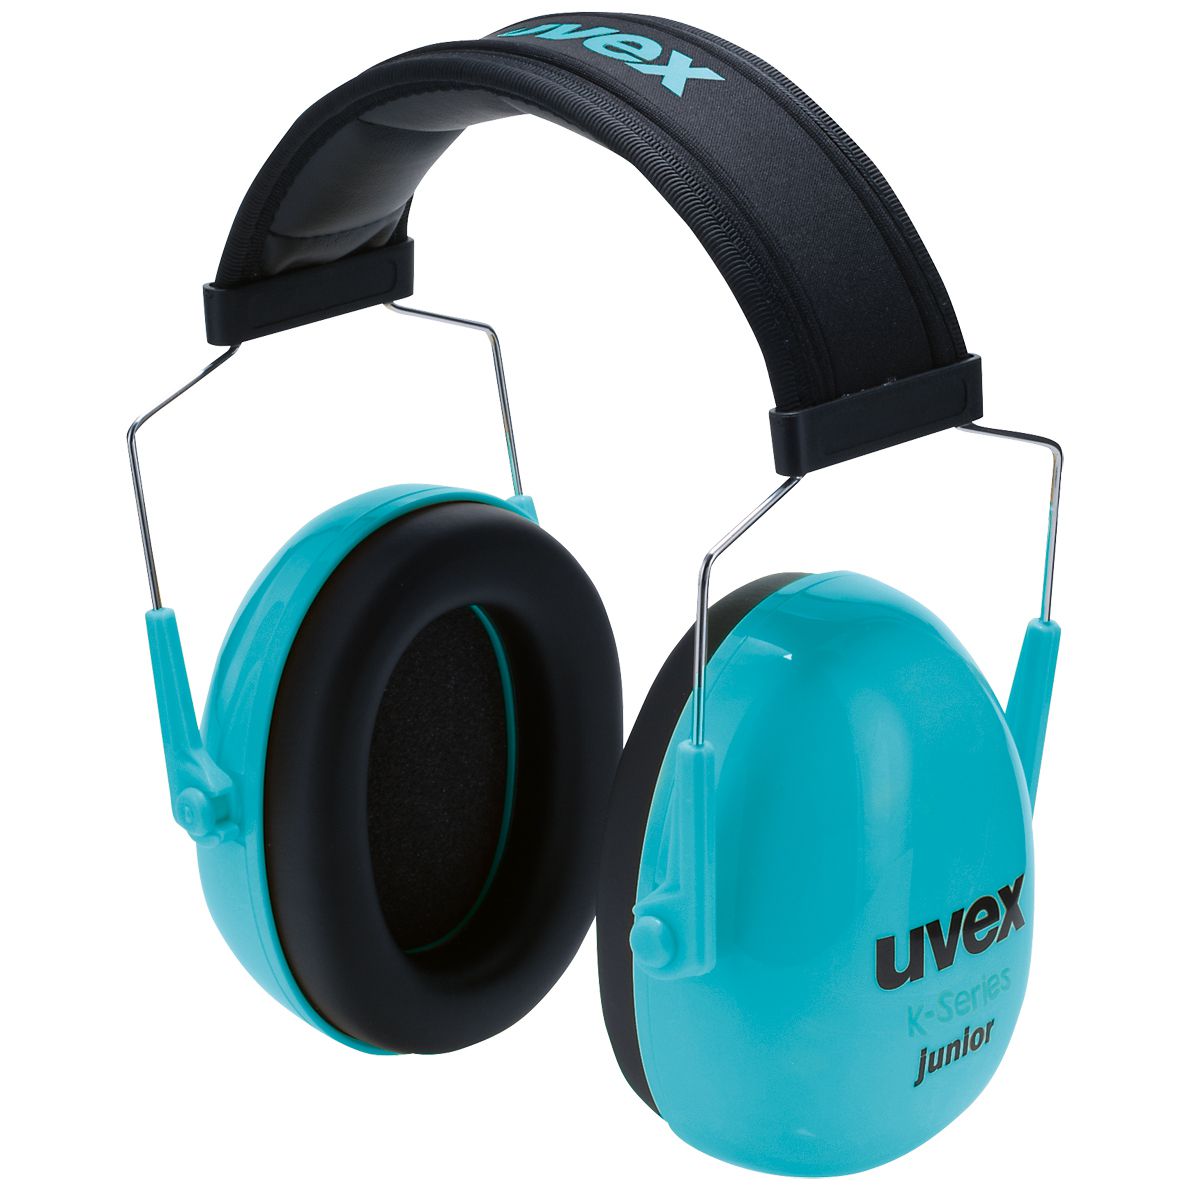 uvex Safety K junior earmuffs for children SNR 29, optimum protection up to 109 dB, light blue